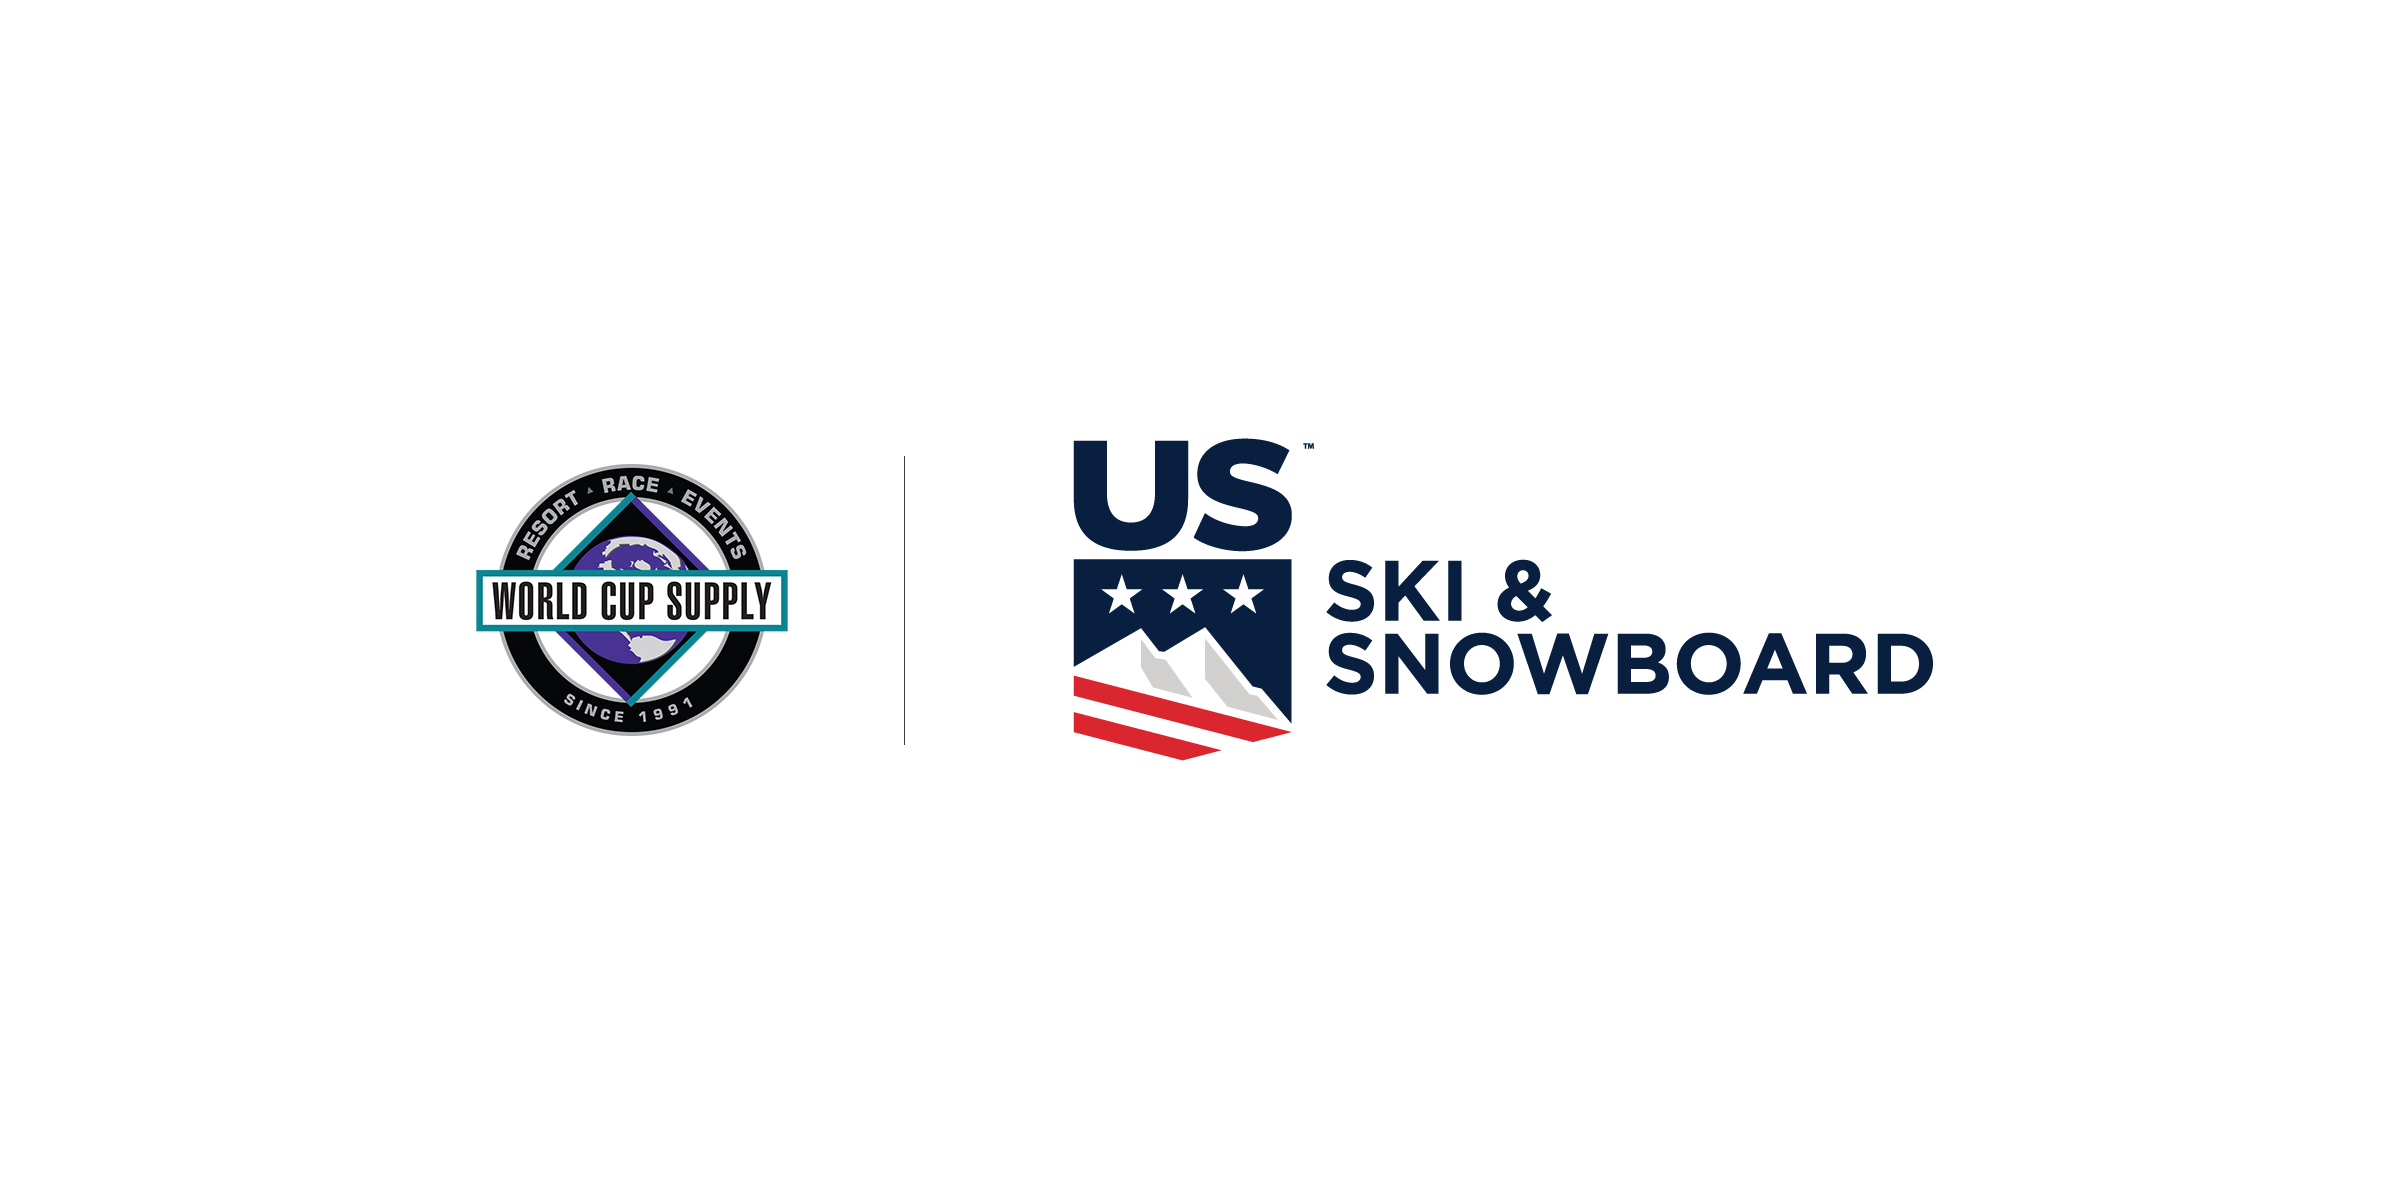 World Cup Supply U.S. Ski & Snowboard Logos